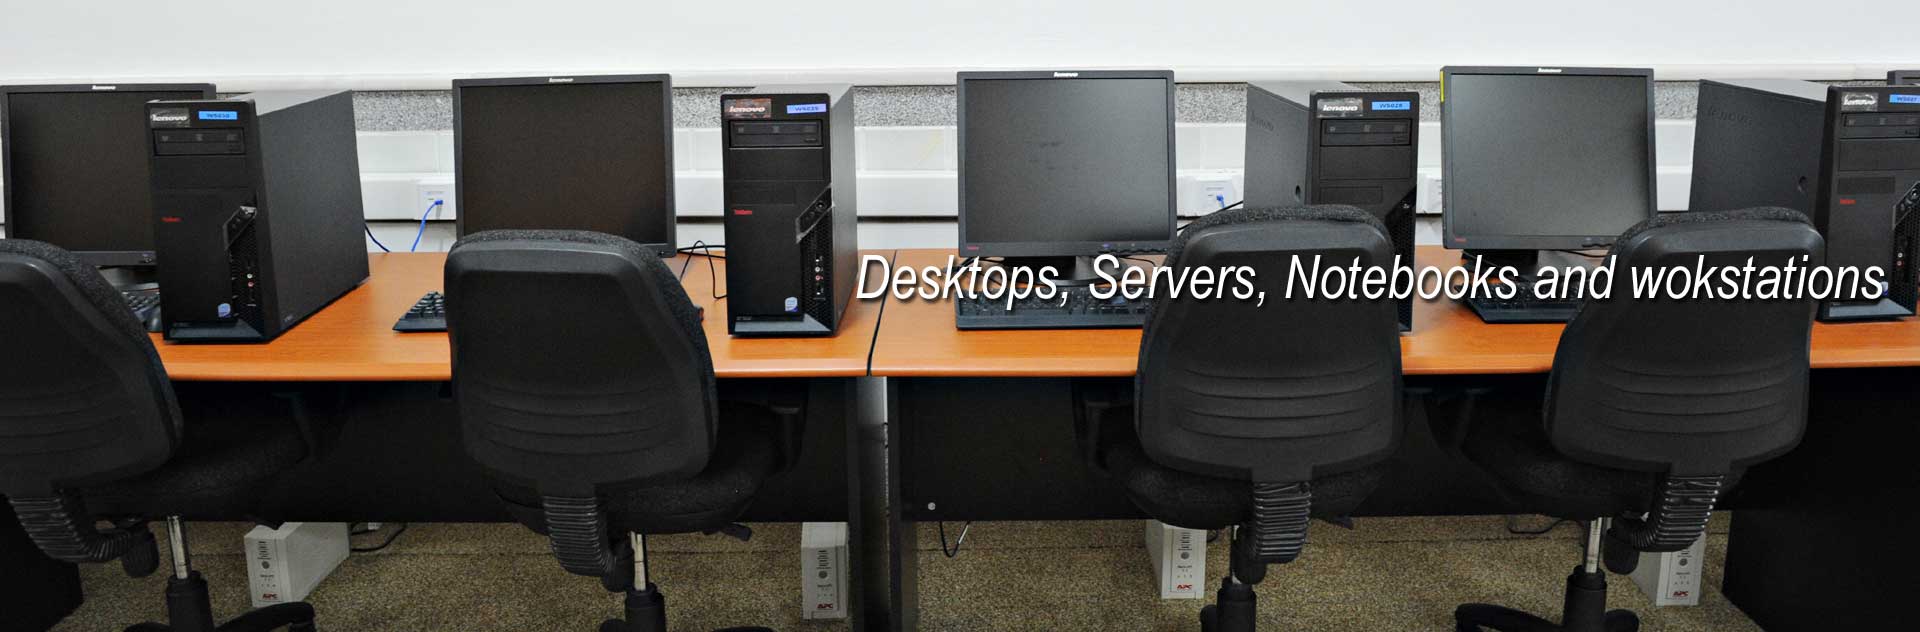 Notebooks, Desktops, Servers and workstations